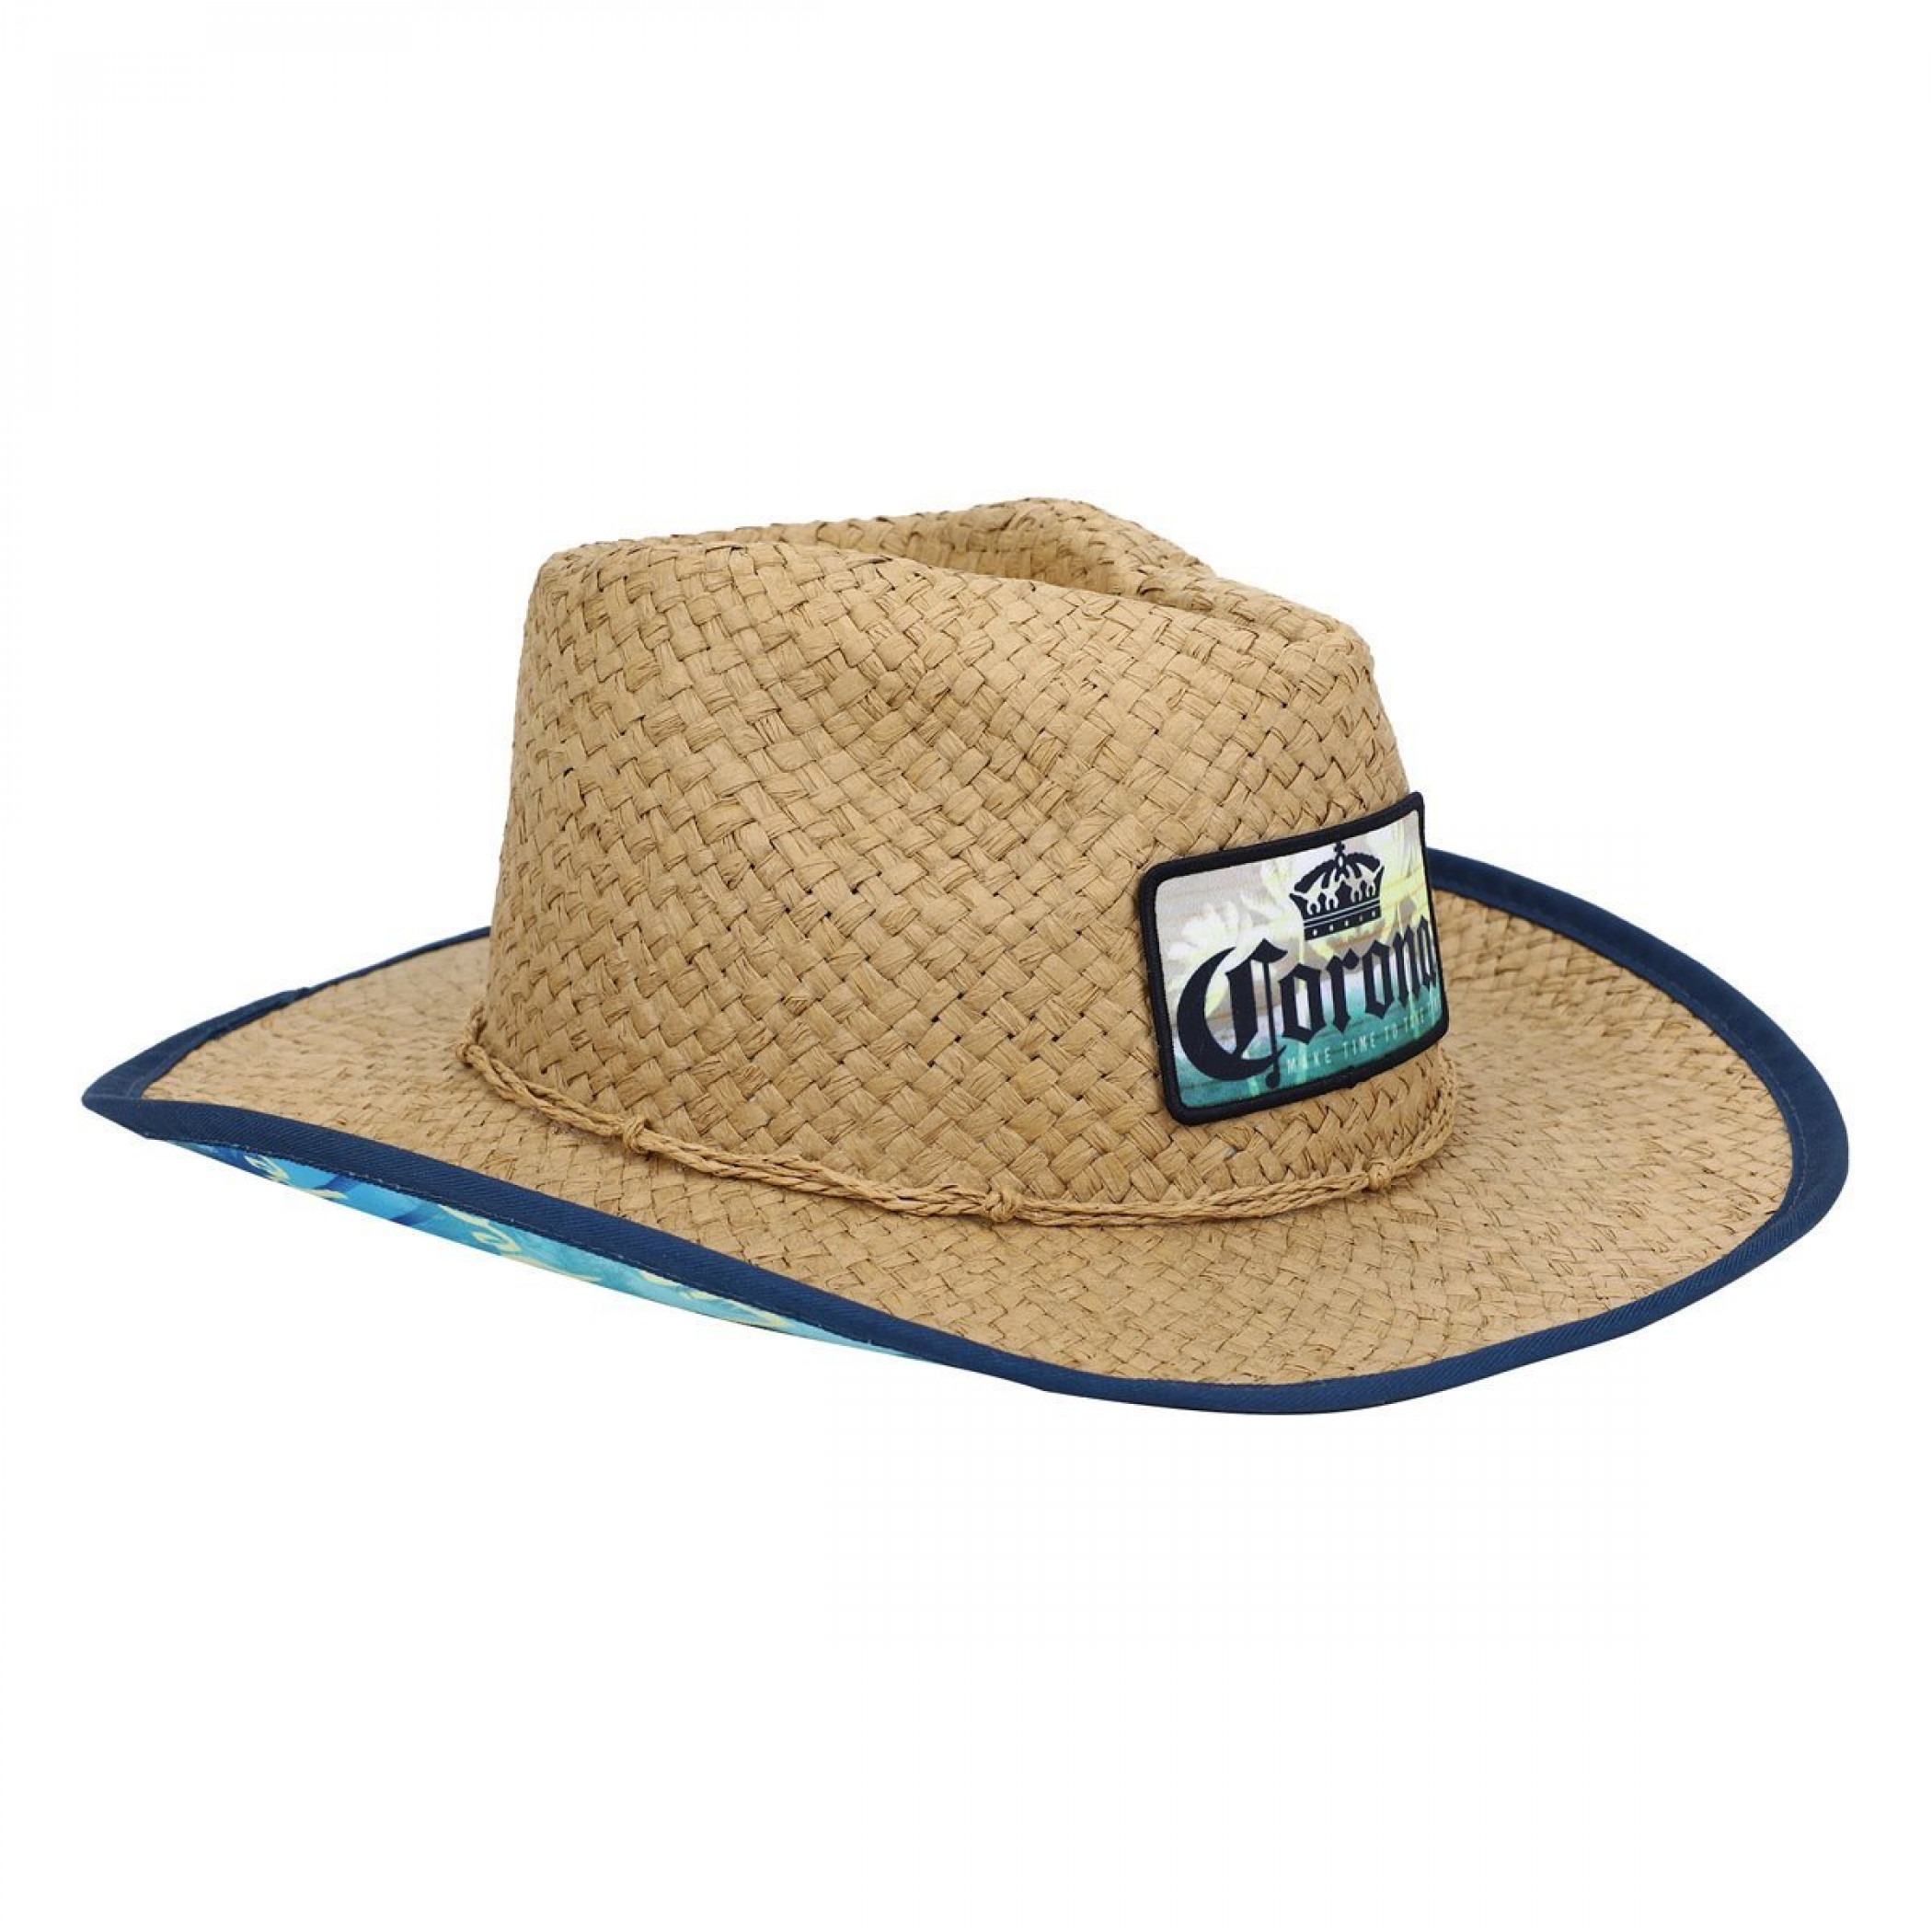 Corona Extra Logo Patch Straw Hat with Printed Underbrim